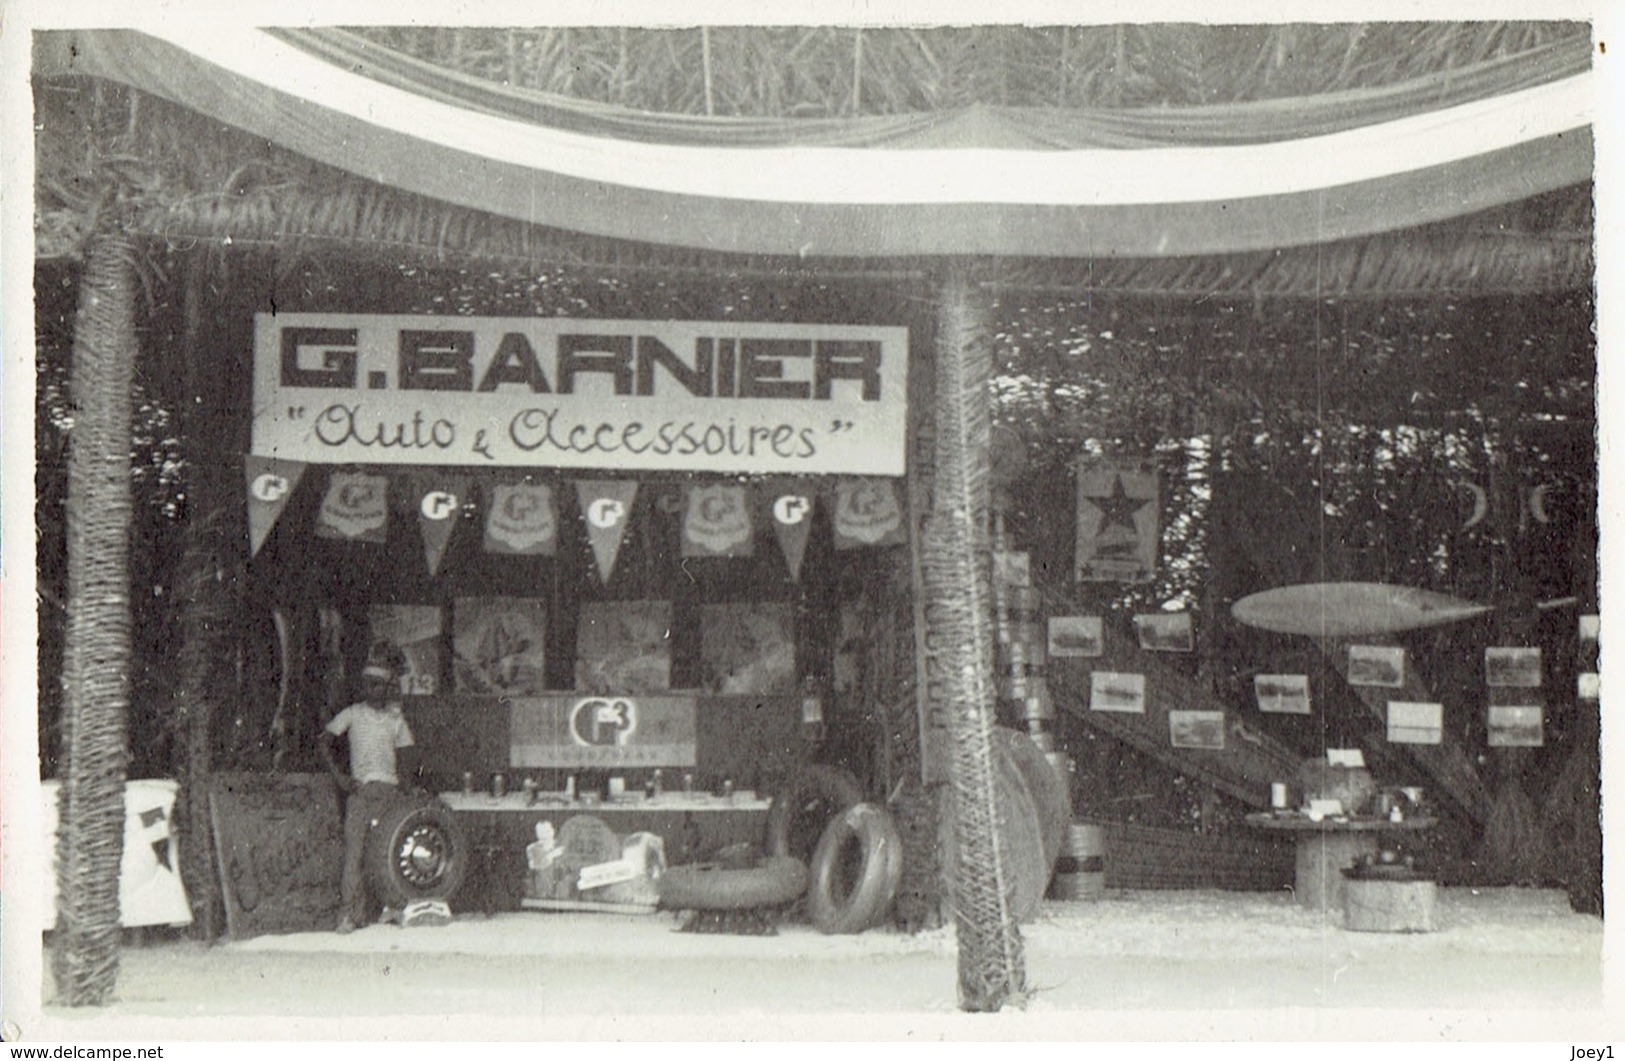 Photo Brazzaville En 1933 Salon Auto,stand Du Garage Barnier. - Afrika